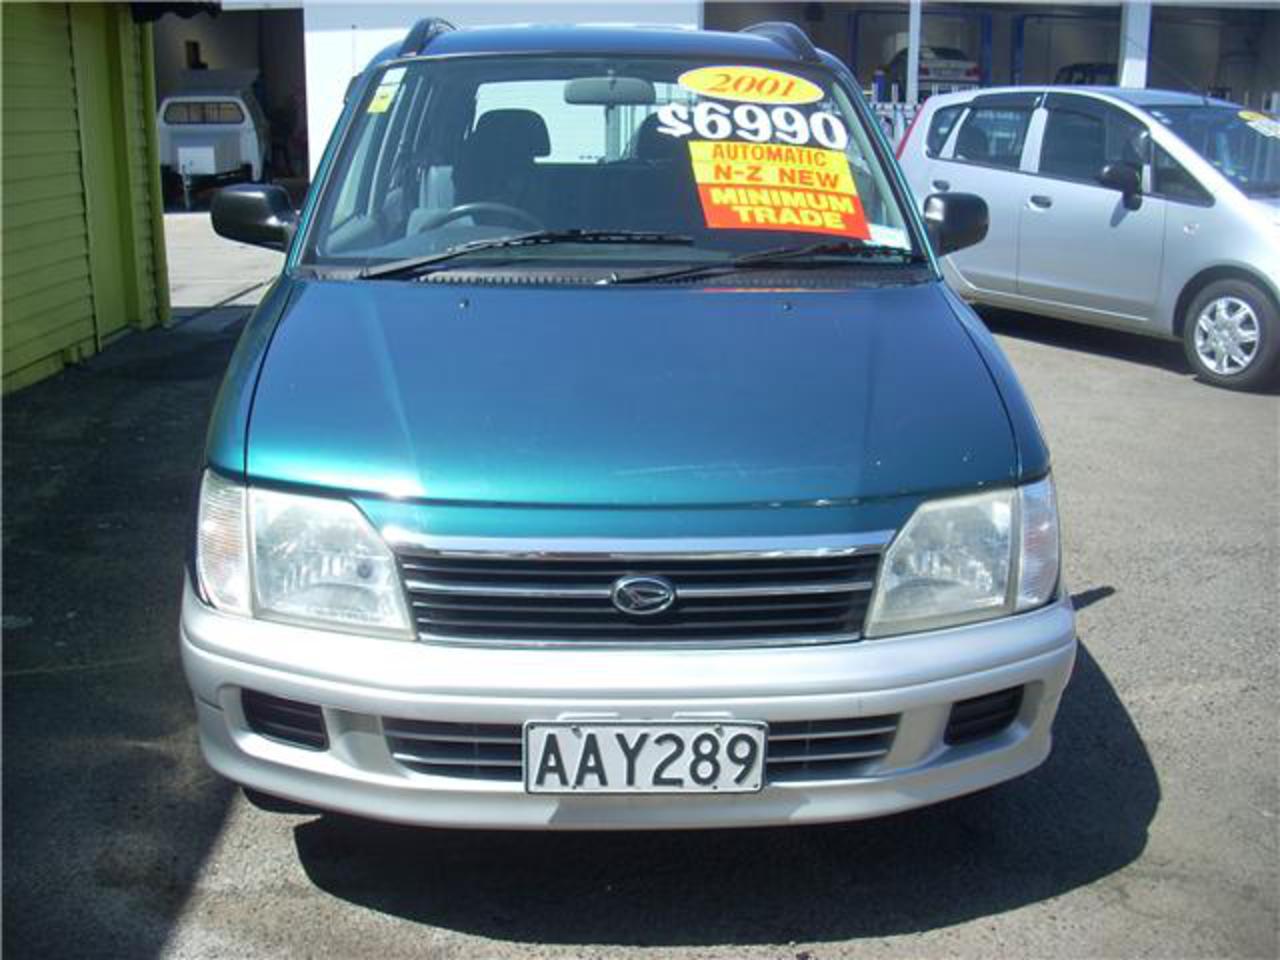 2001 Daihatsu Pyzar GRV/S - $6,990.00